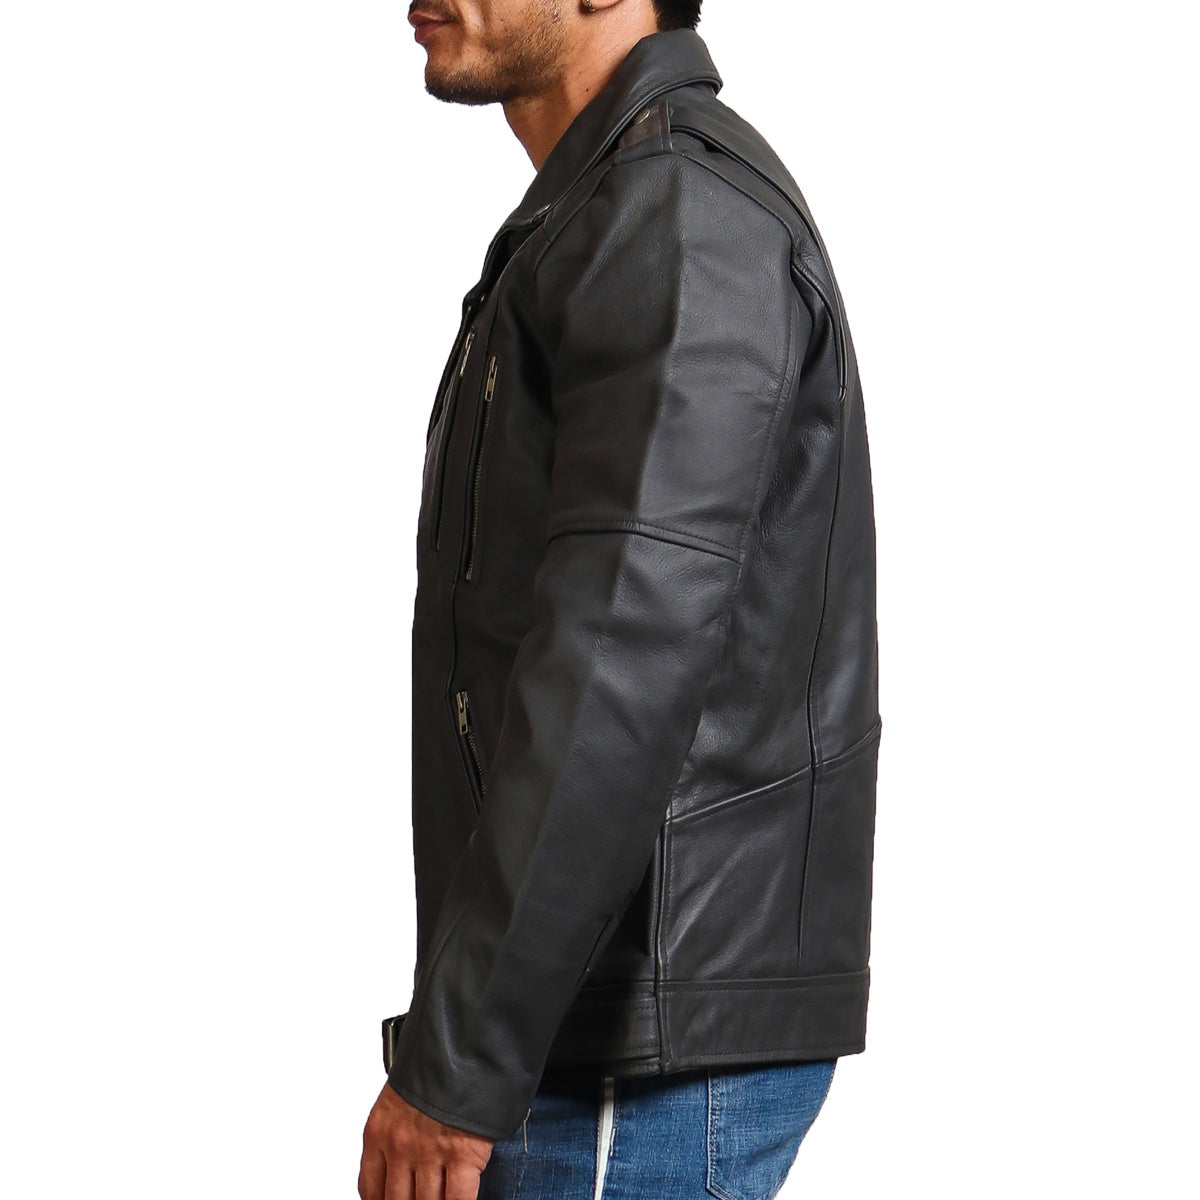 Men's Grey Leather Motorcycle Jacket